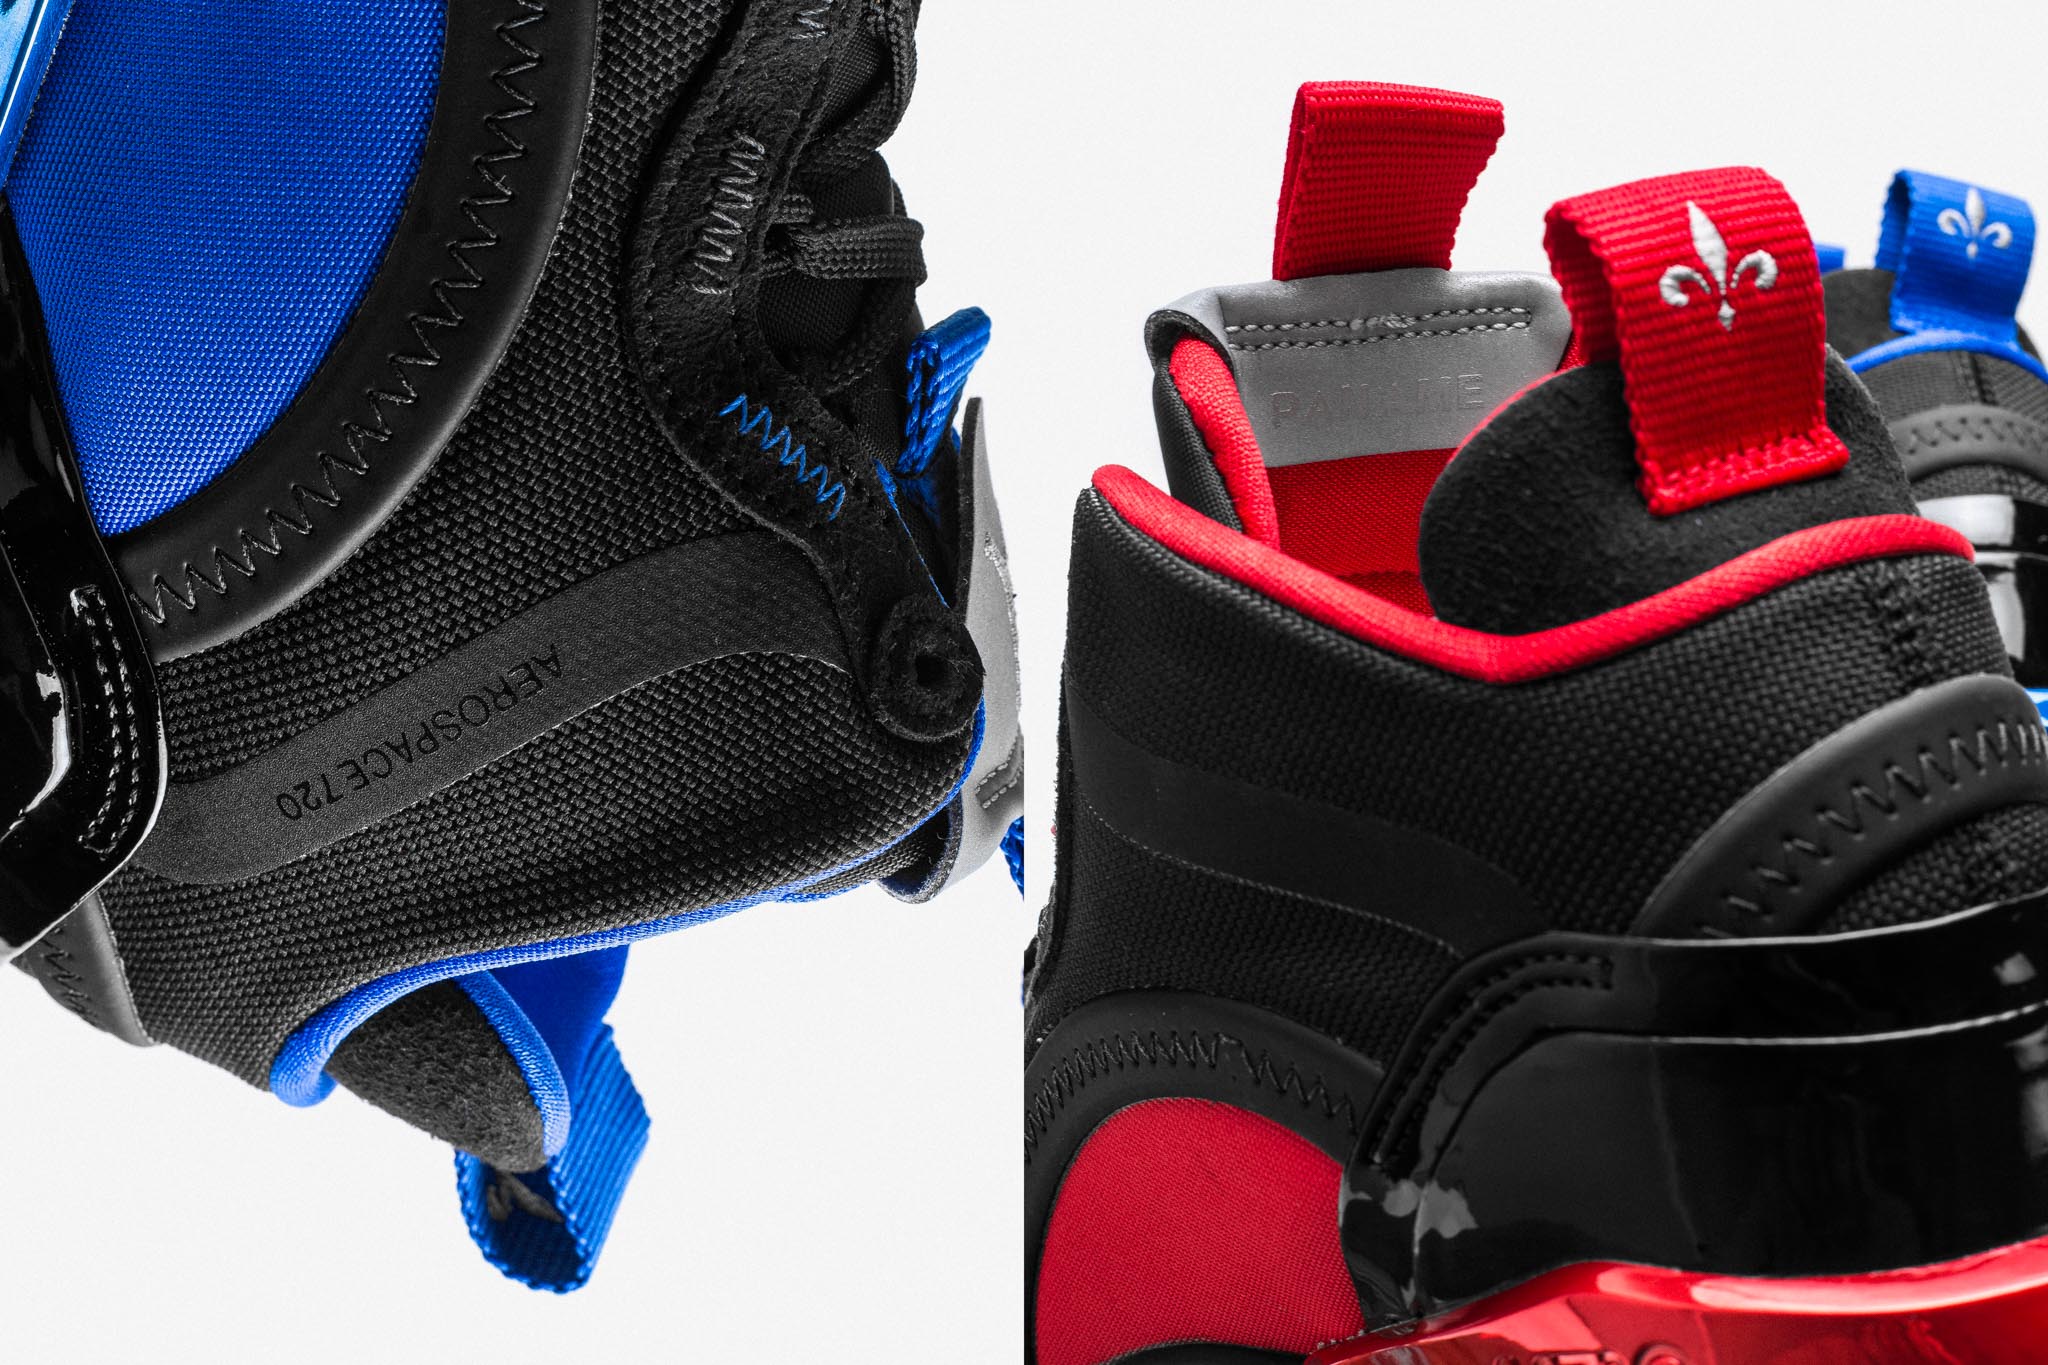 Jordan Men's Aerospace 720 Paris Saint-Germain Basketball Shoes in Blue/Black/Red Size 10.5 | Leather